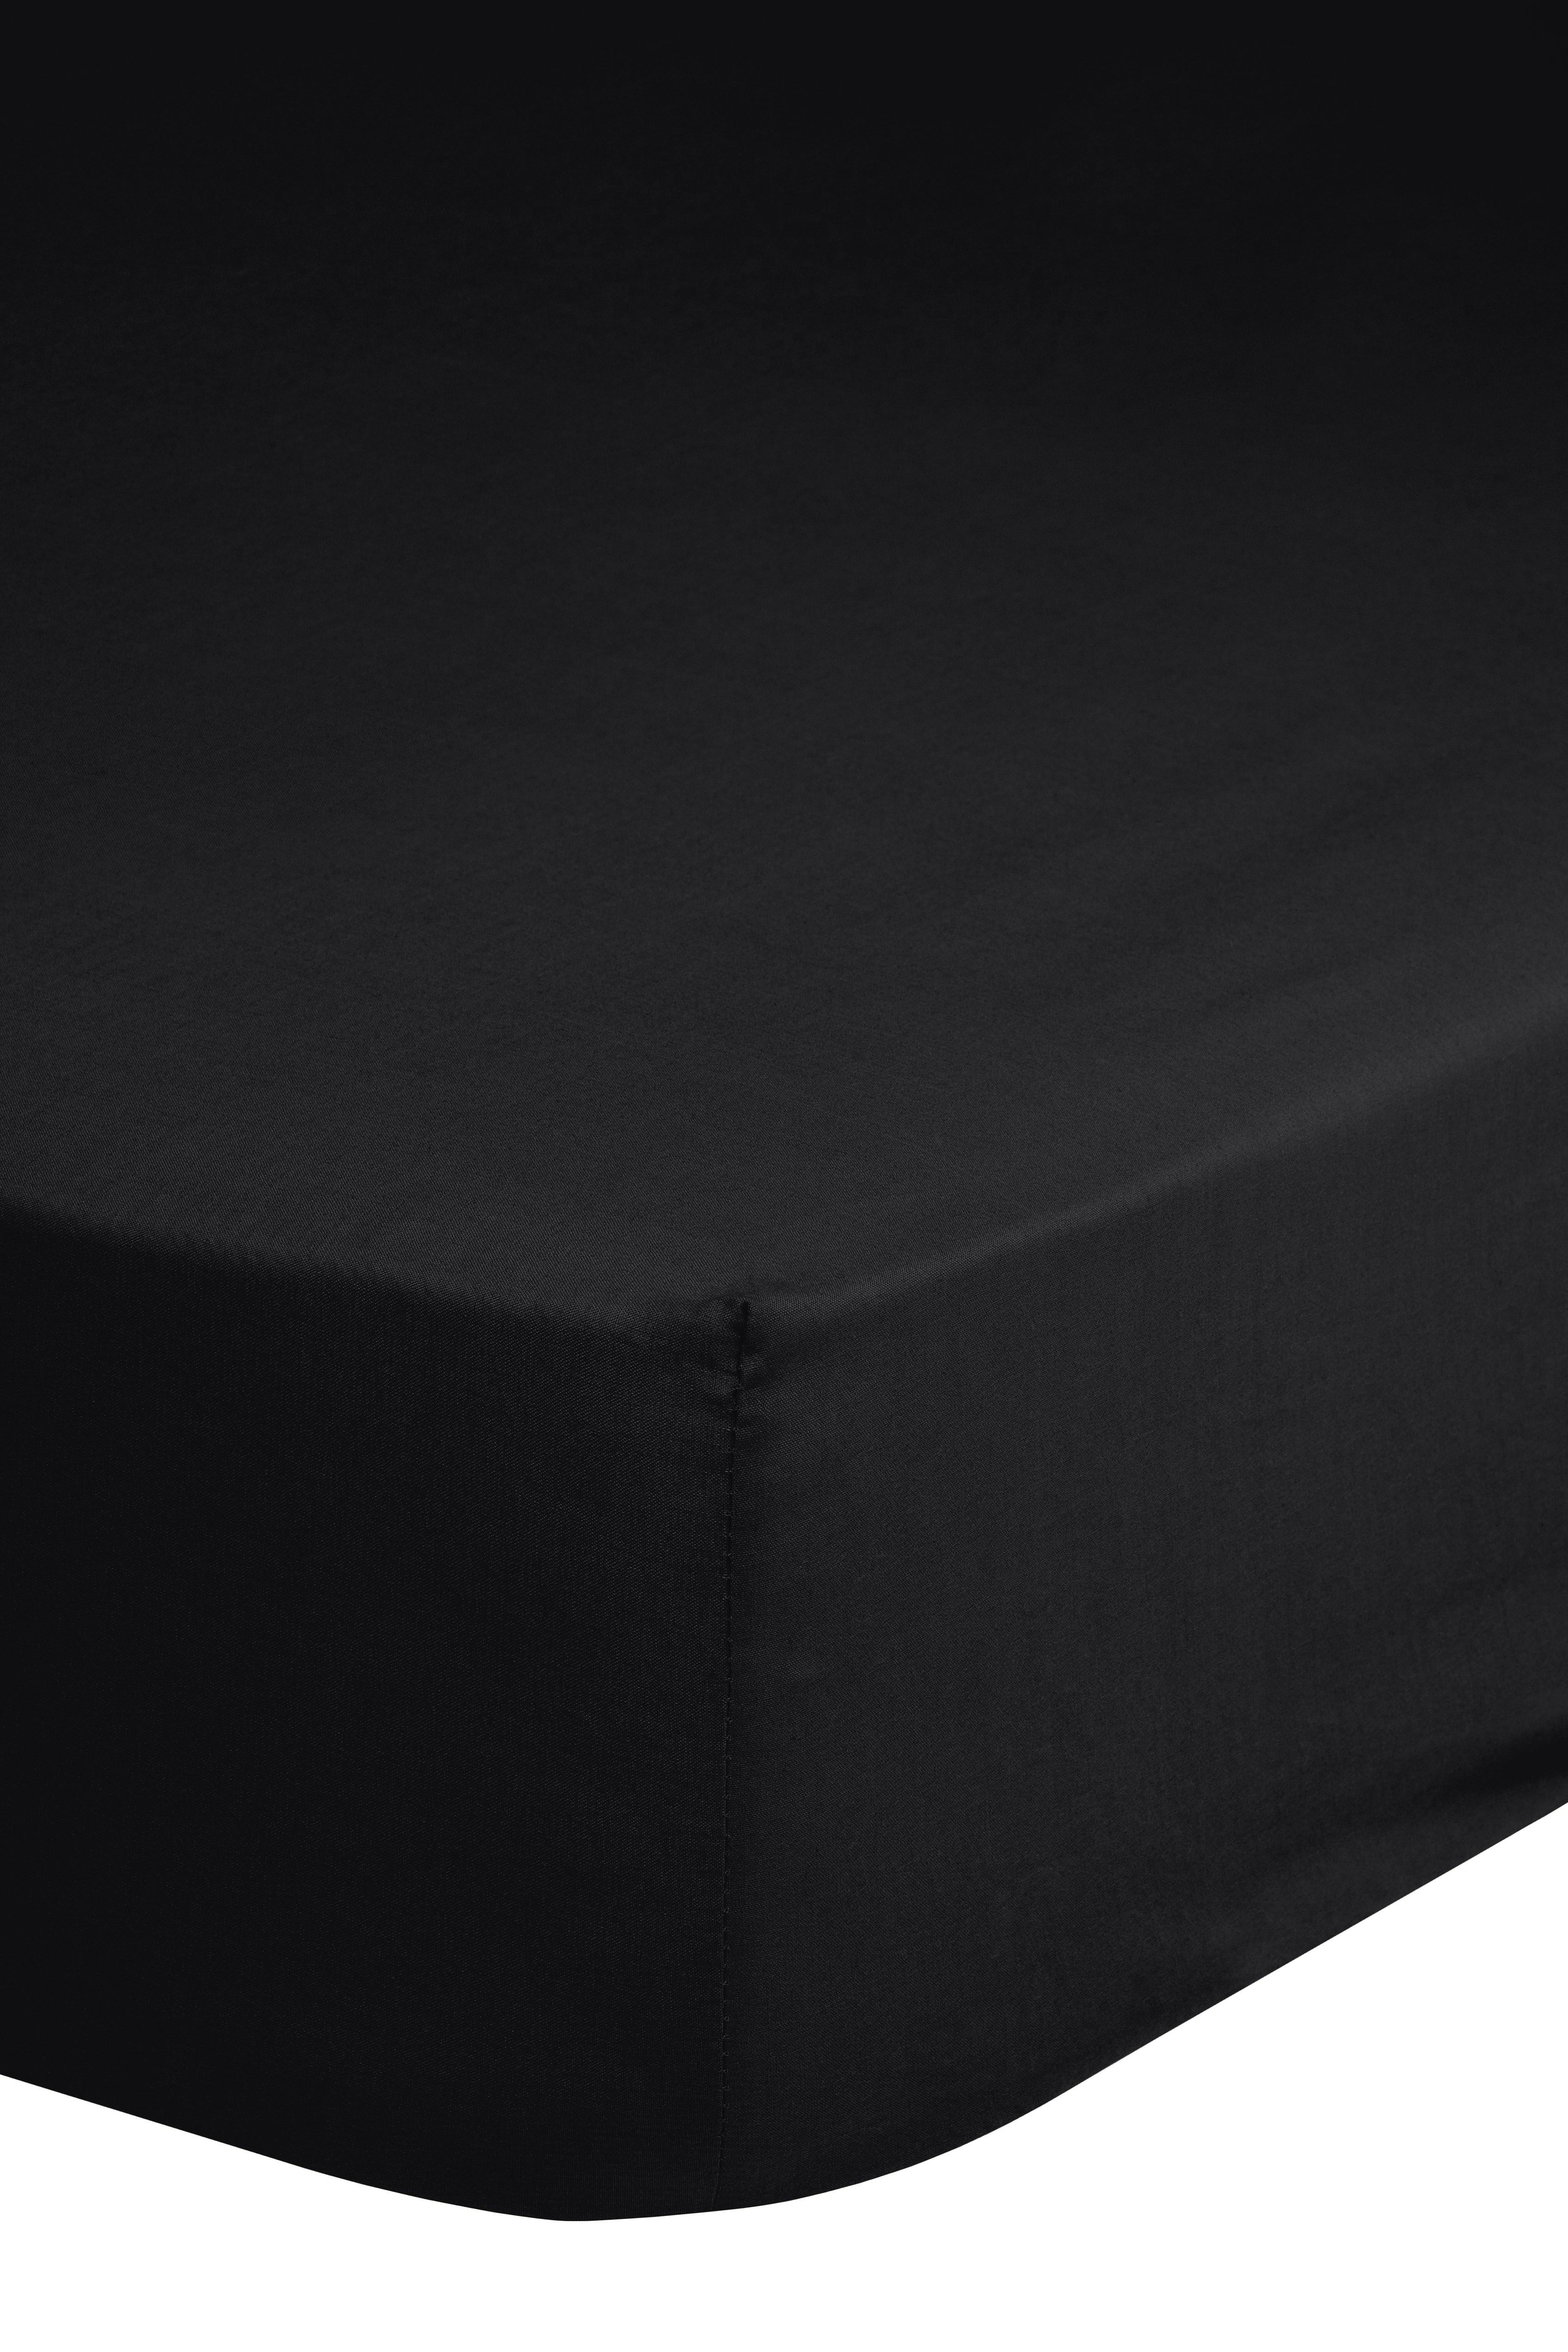 Elastické Prostěradlo Jersey 140x200cm Bavlna - černá, Basics, textil (140/200cm) - MID.YOU